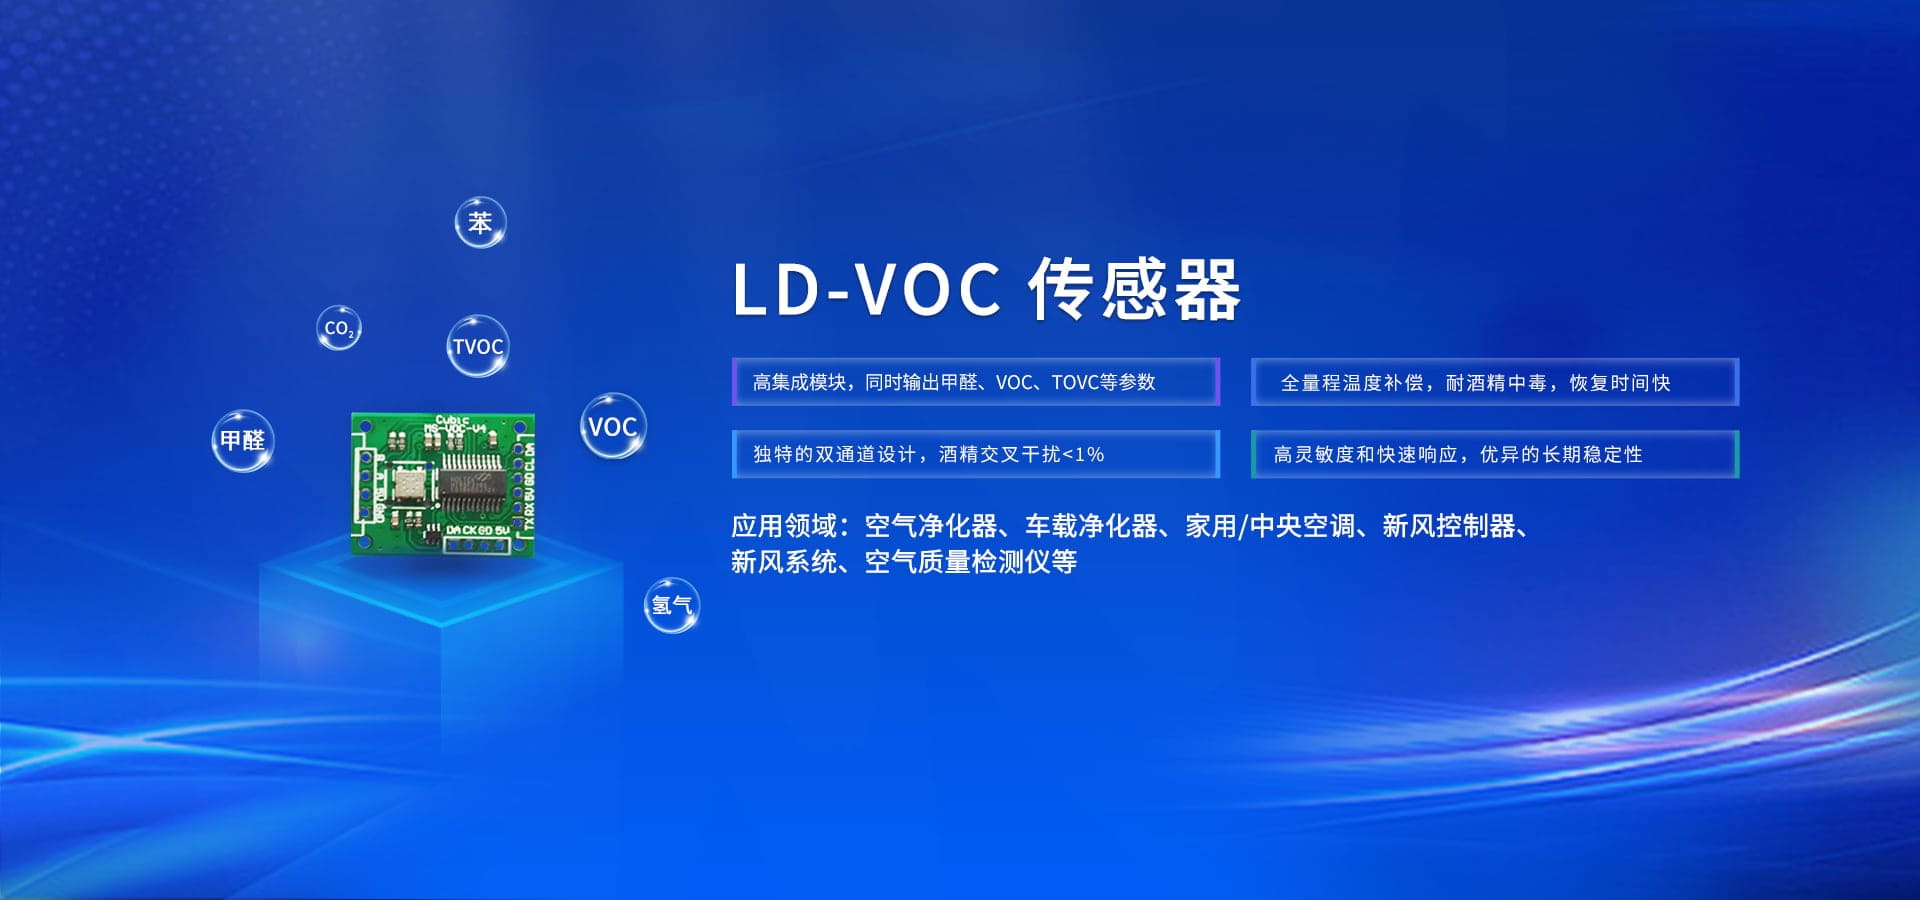 LD-VOC传感器